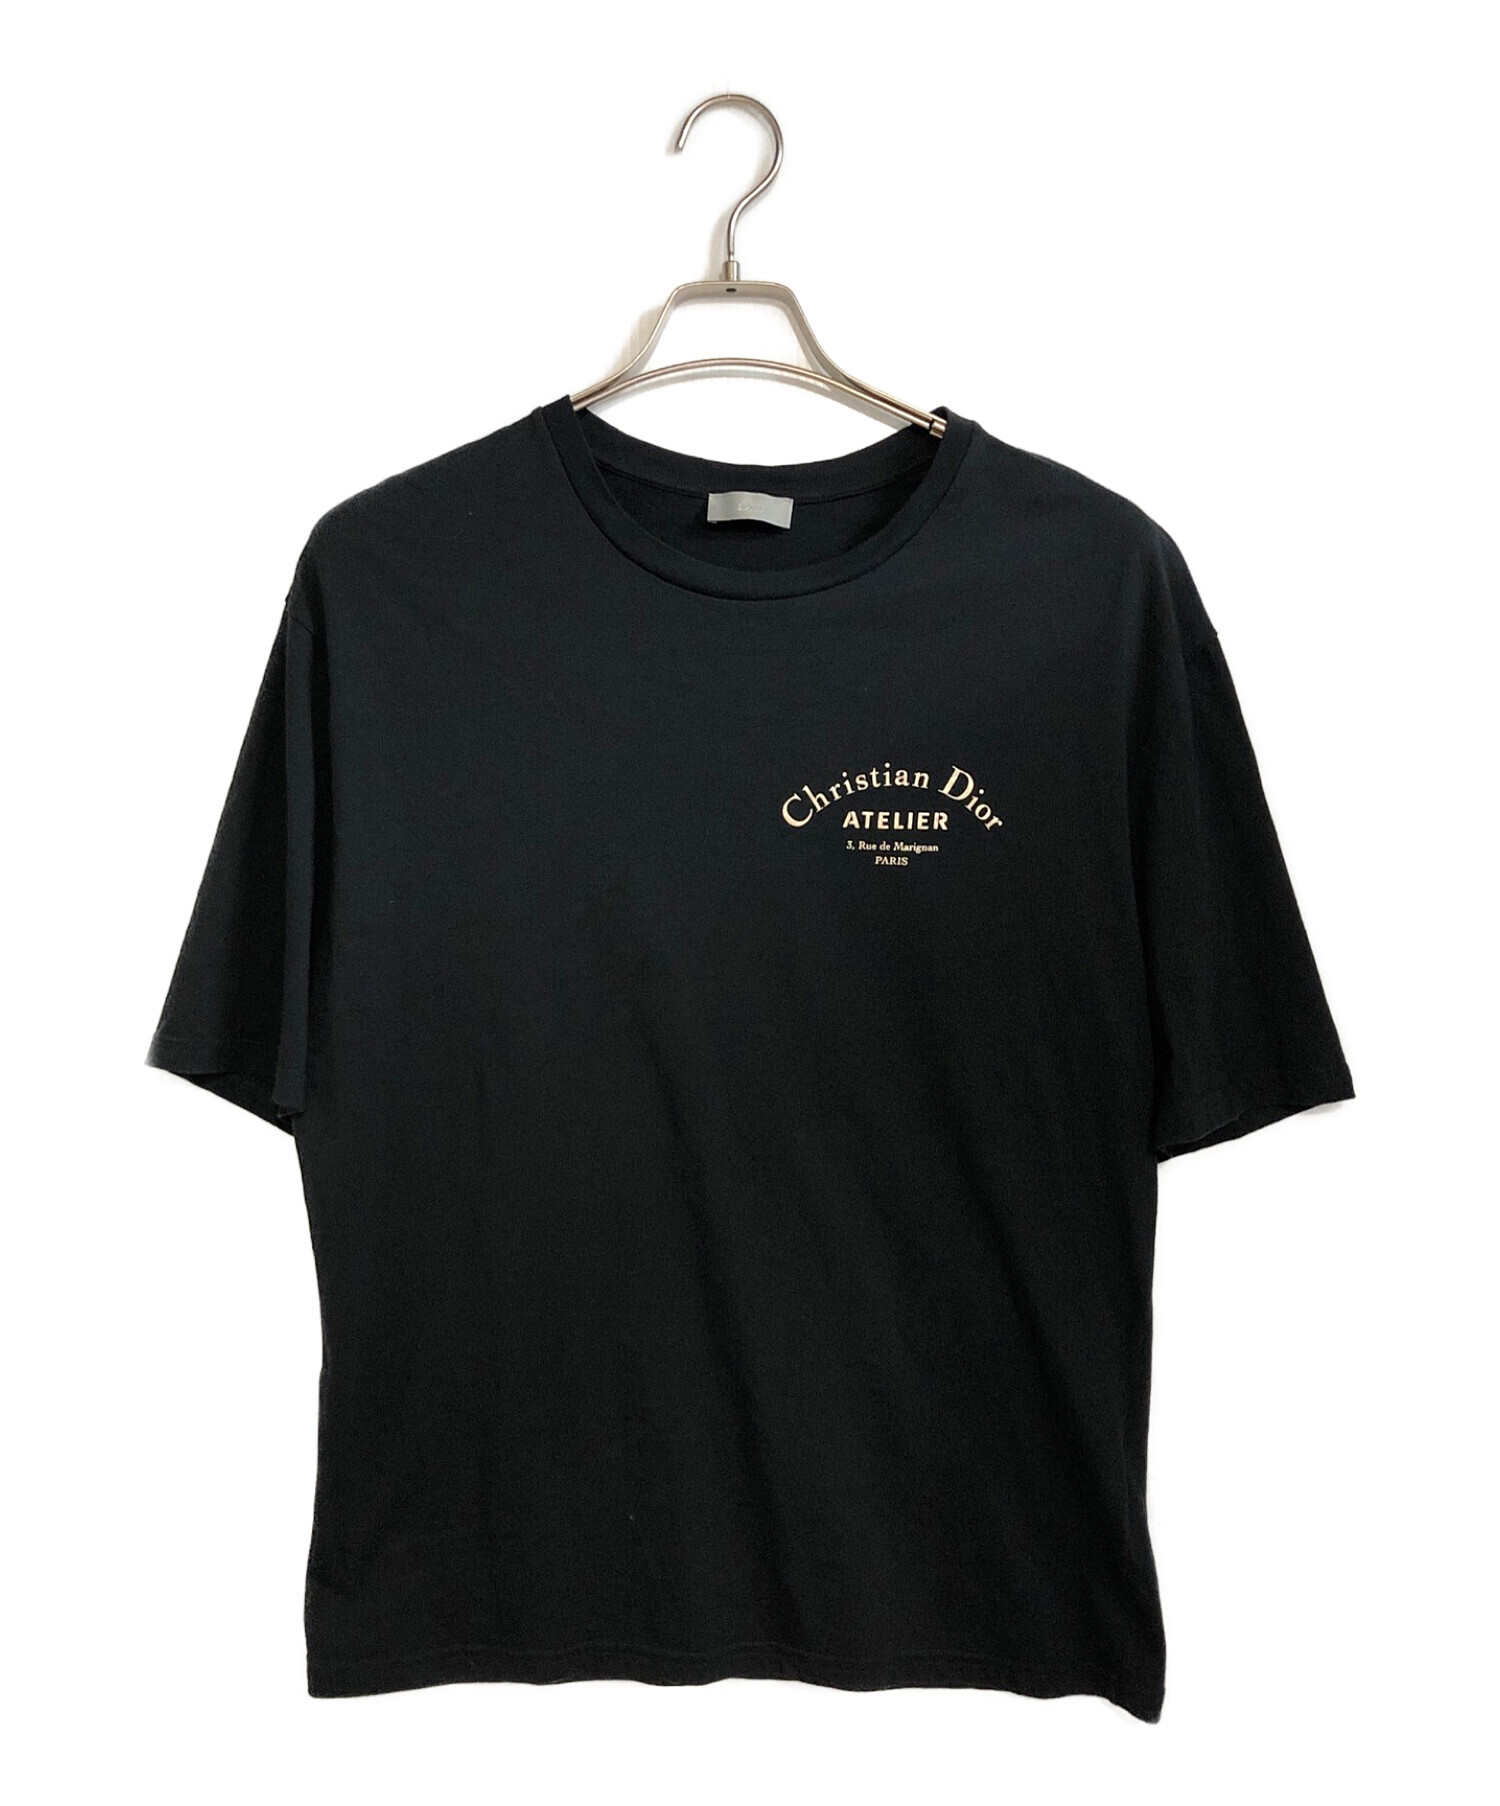 Christian Dior (クリスチャン ディオール) アトリエロゴプリントTシャツ ブラック サイズ:L